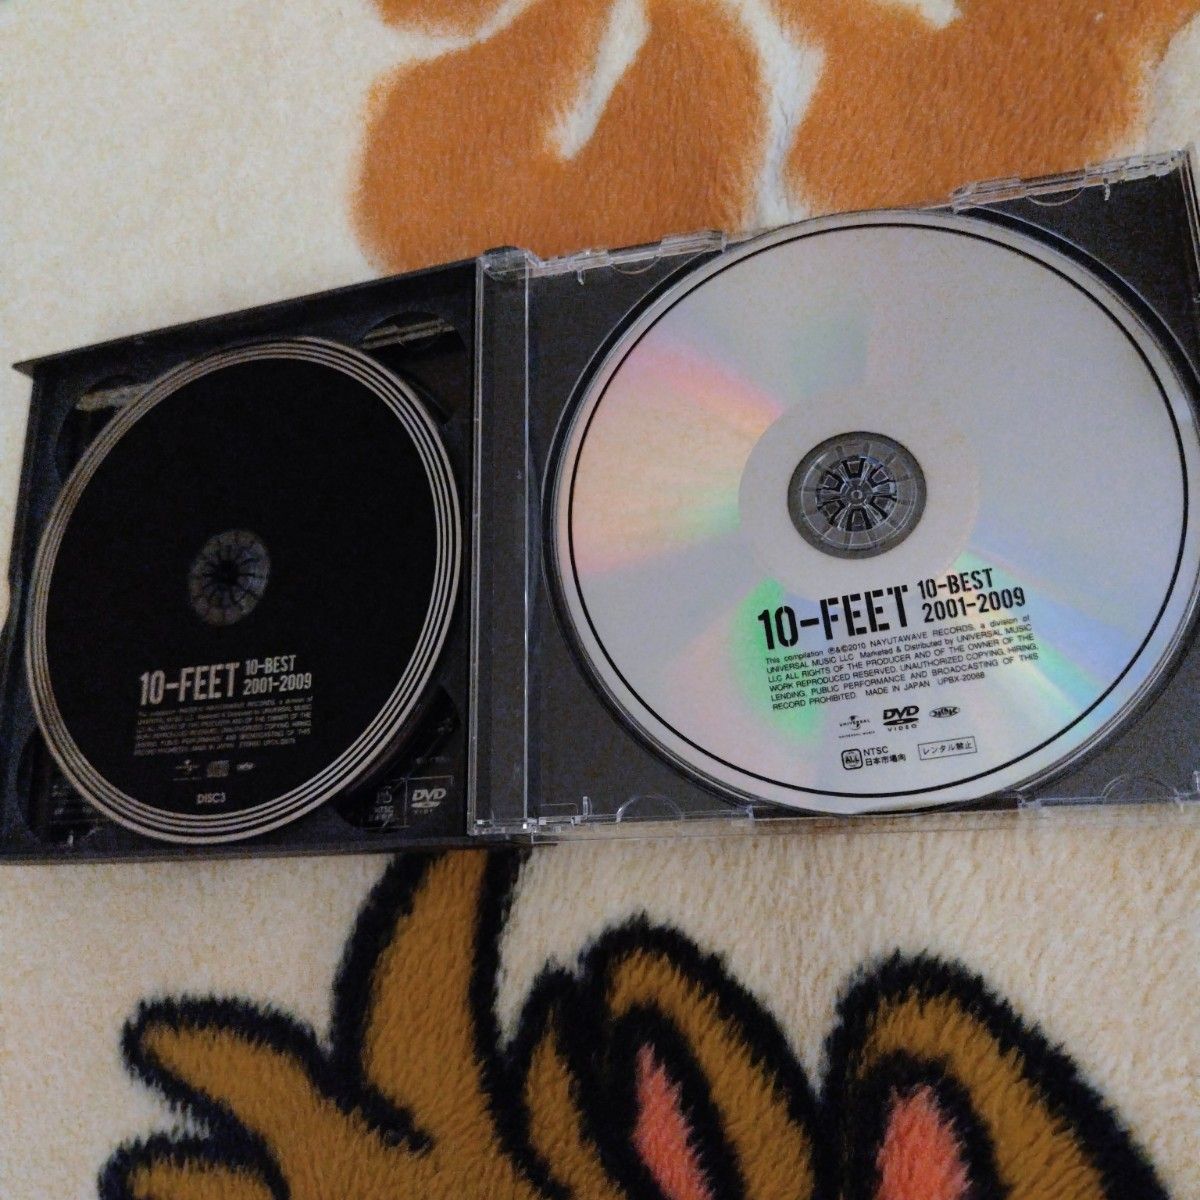 10-FEET / 10-BEST 2001-2009【初回限定盤/DVD付】